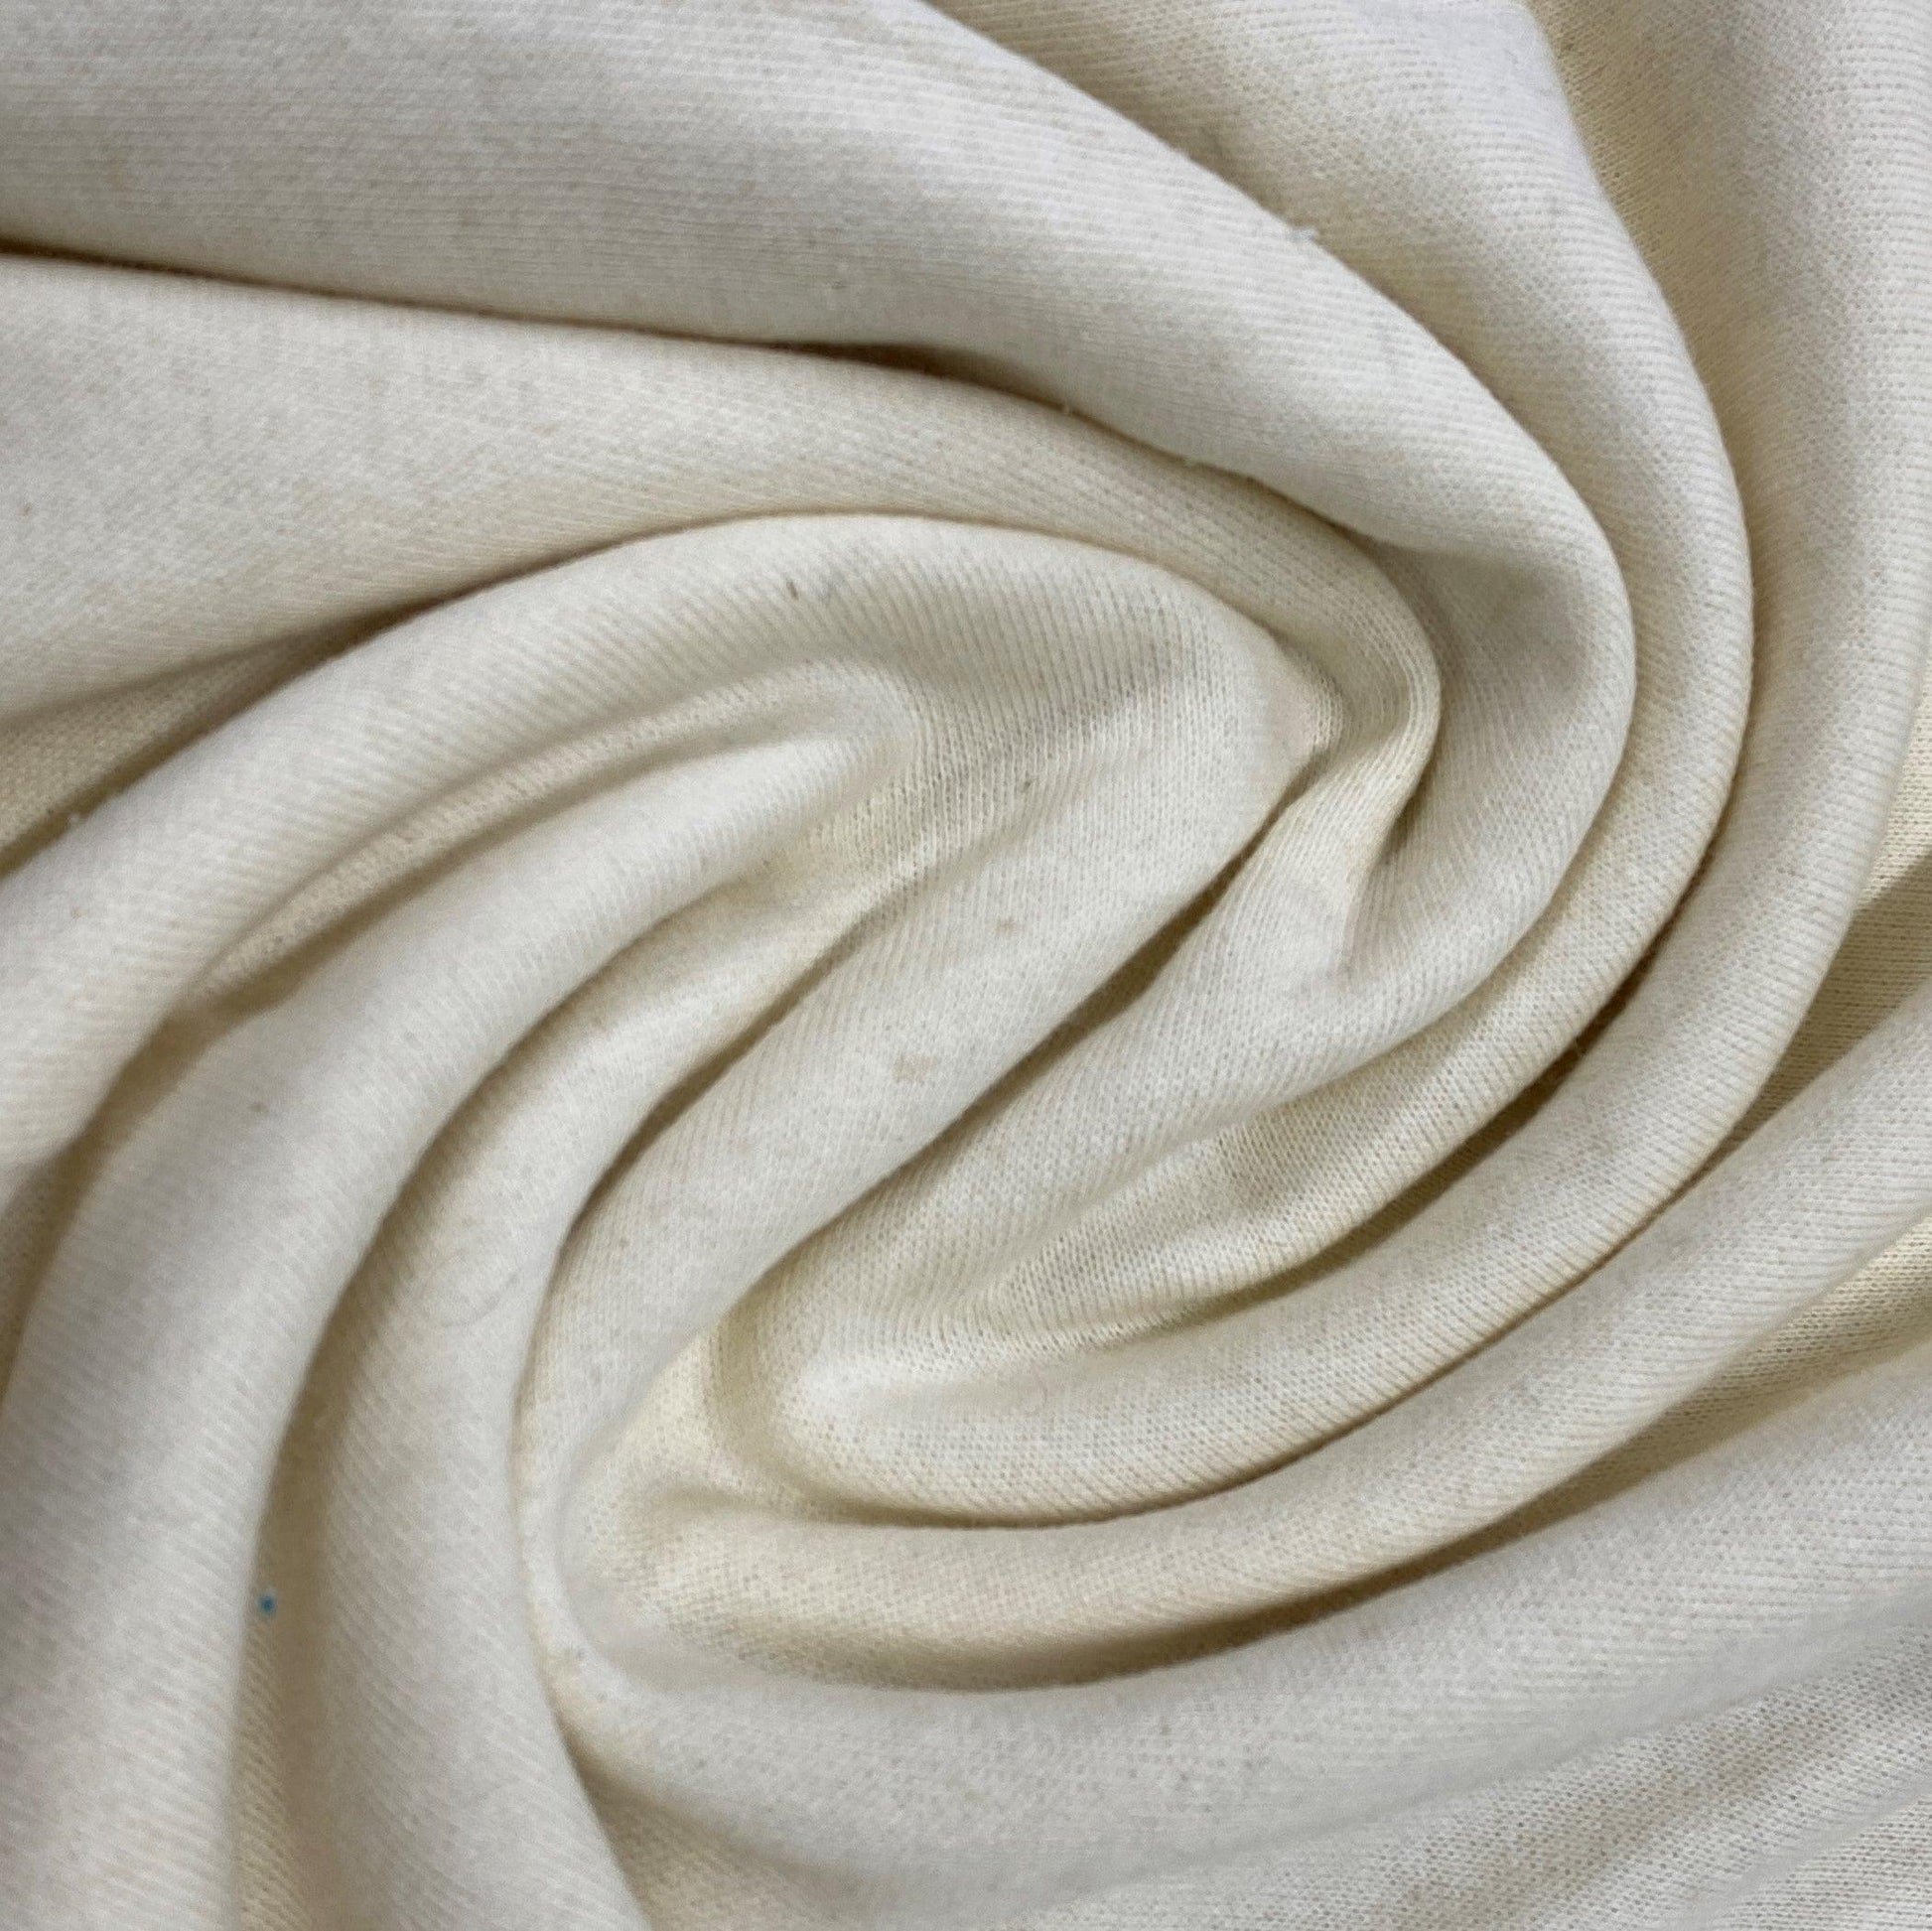 Hemp Cotton Fleece Fabric - 280 GSM, $11.95/yd, 15 Yards